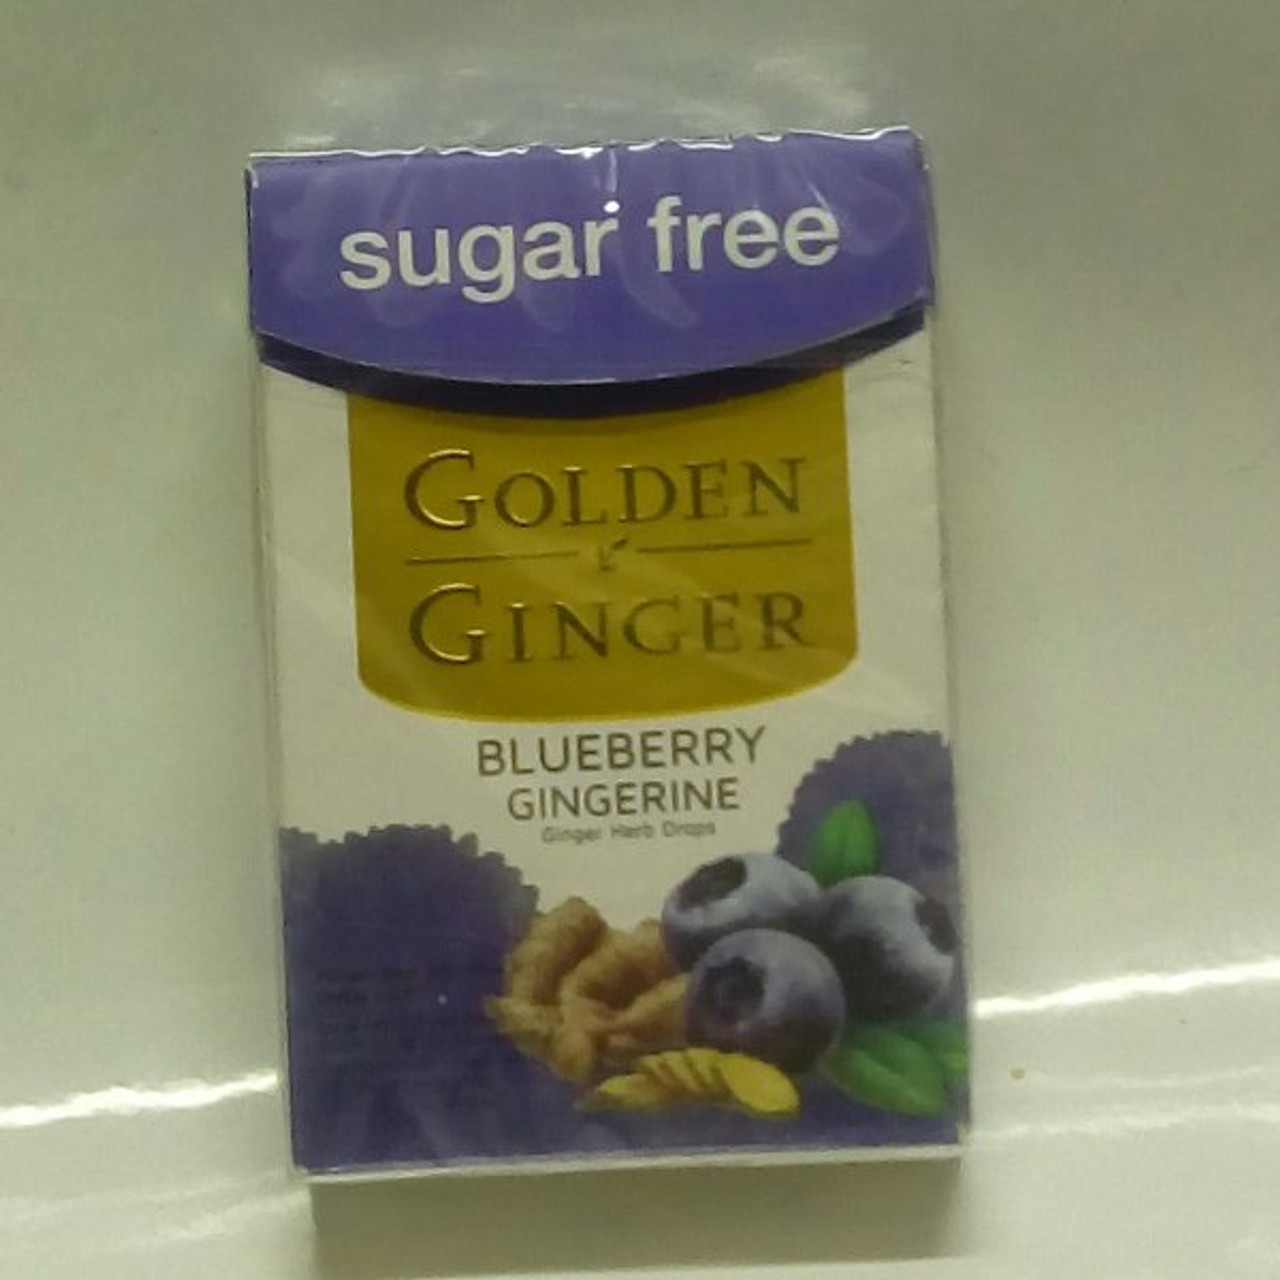 Golden Ginger Herb Drops Blueberry Gingerine (sugar free), 45 Gram